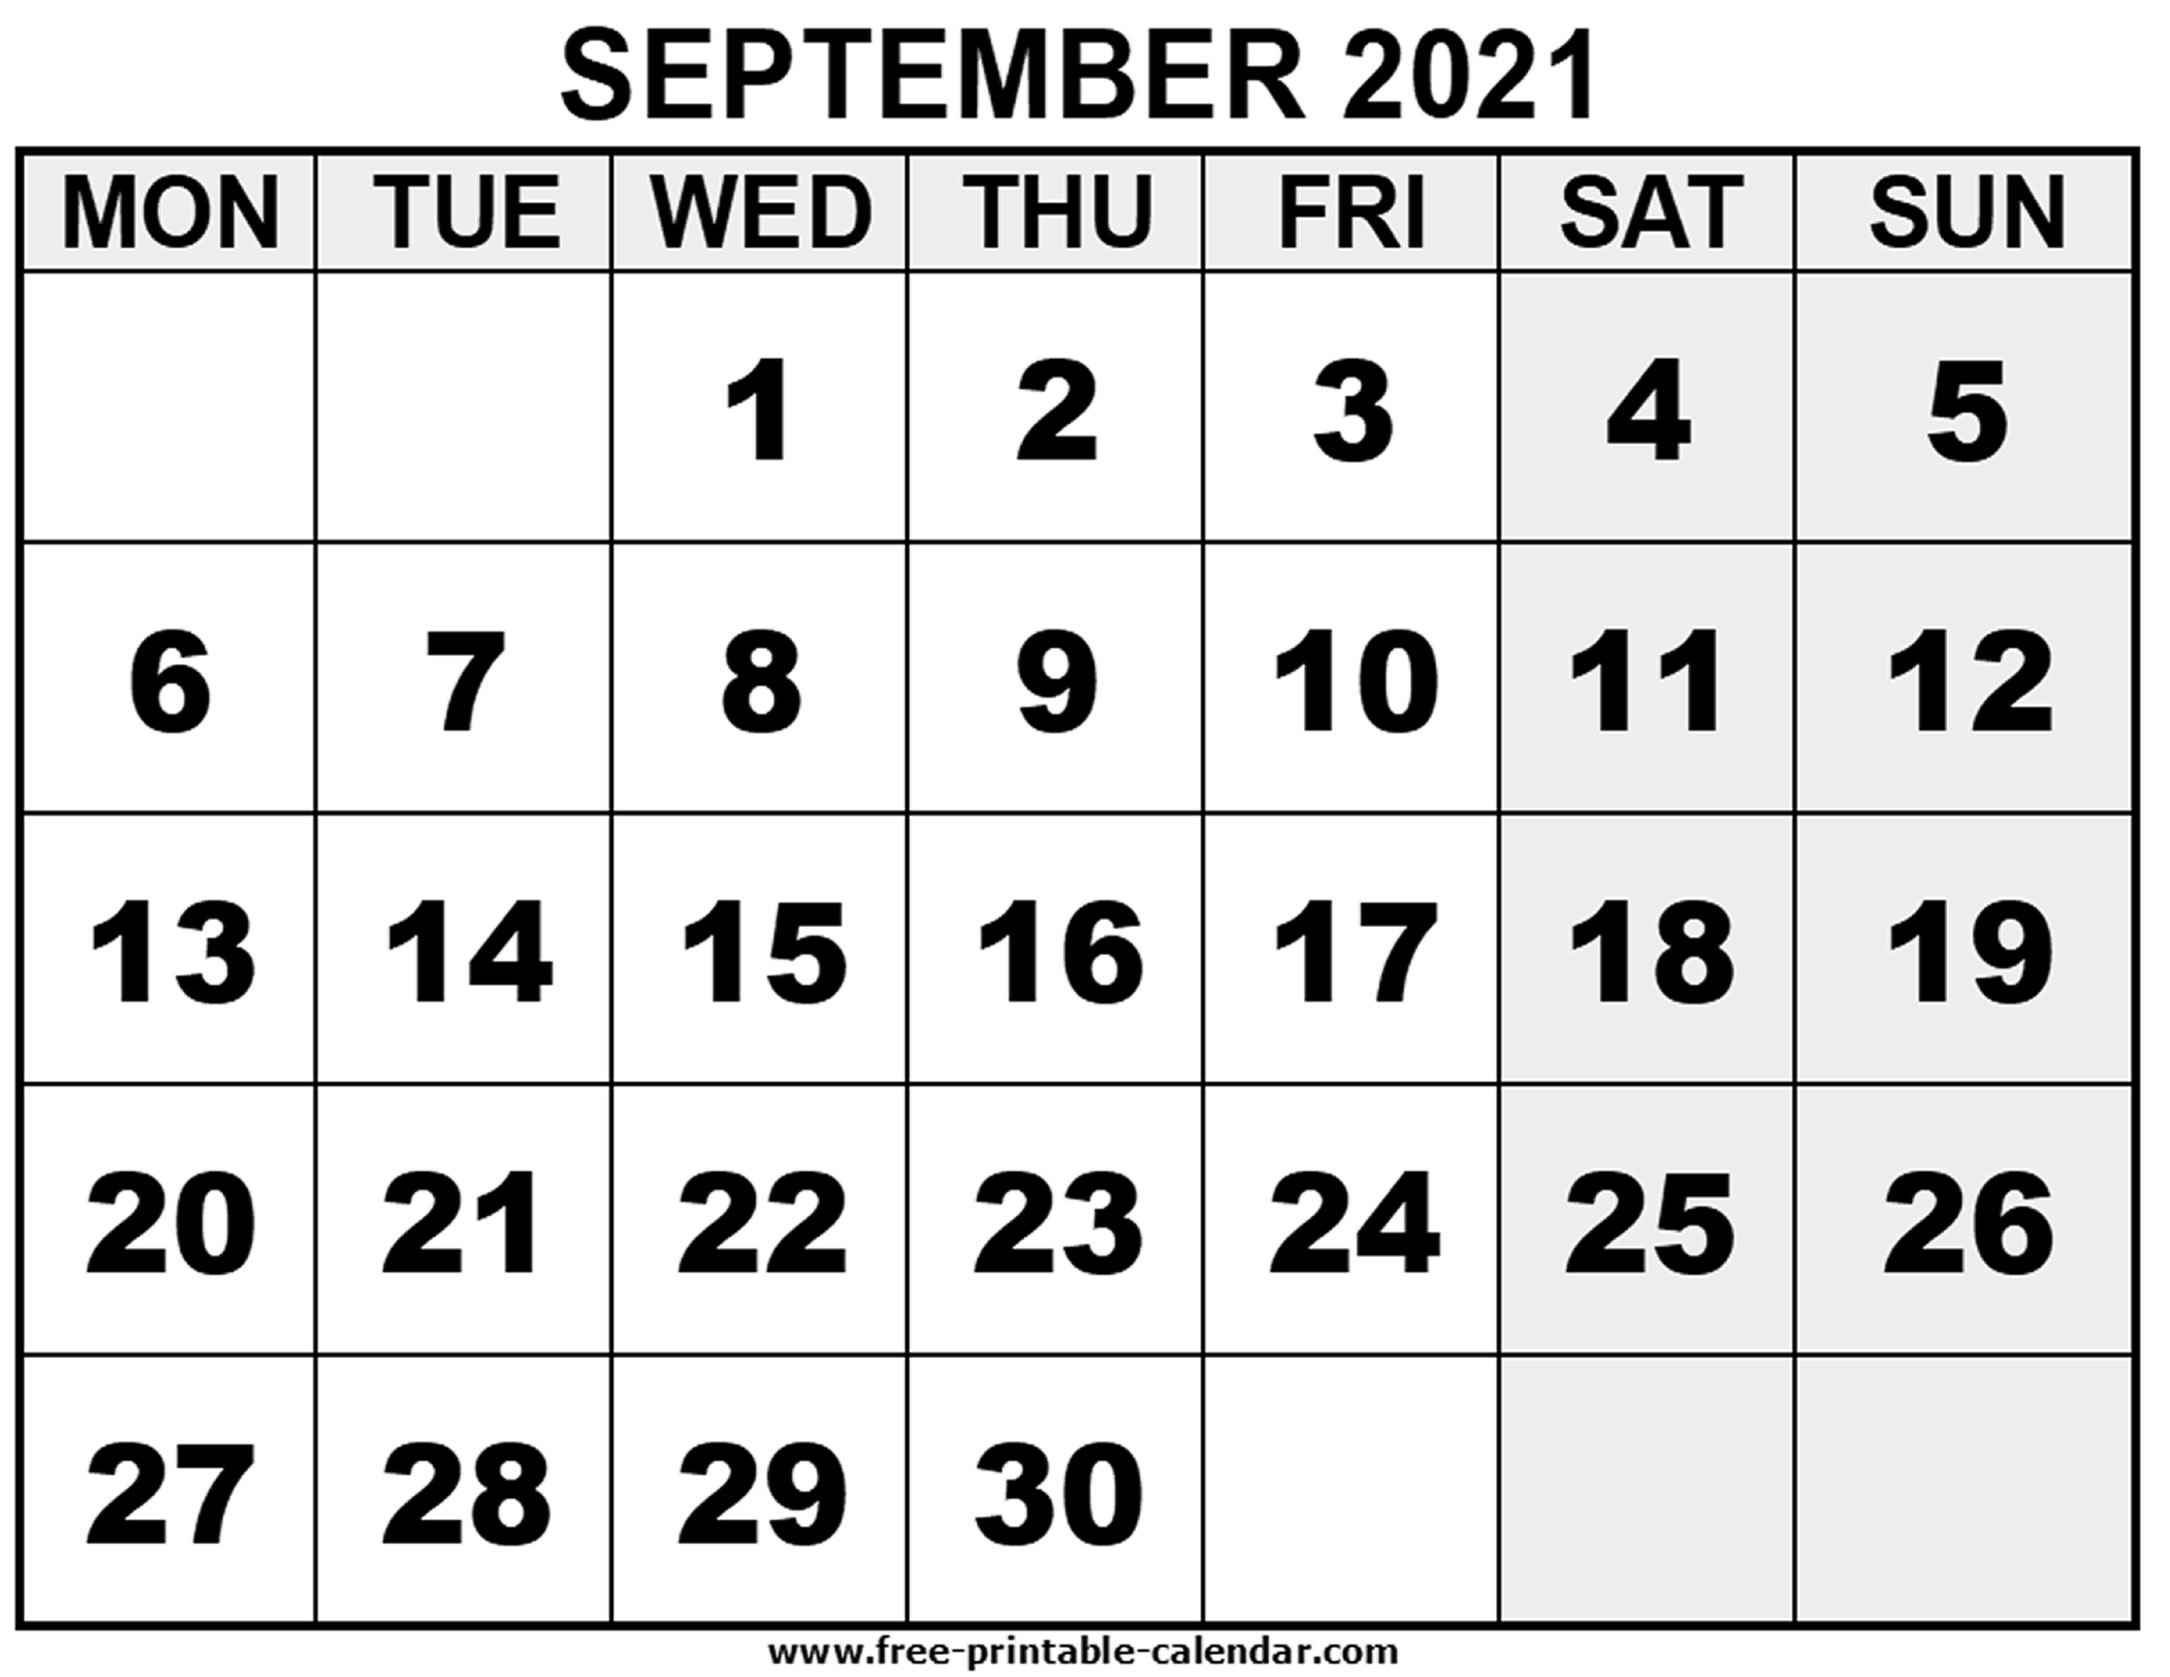 2021 September - Free-Printable-Calendar